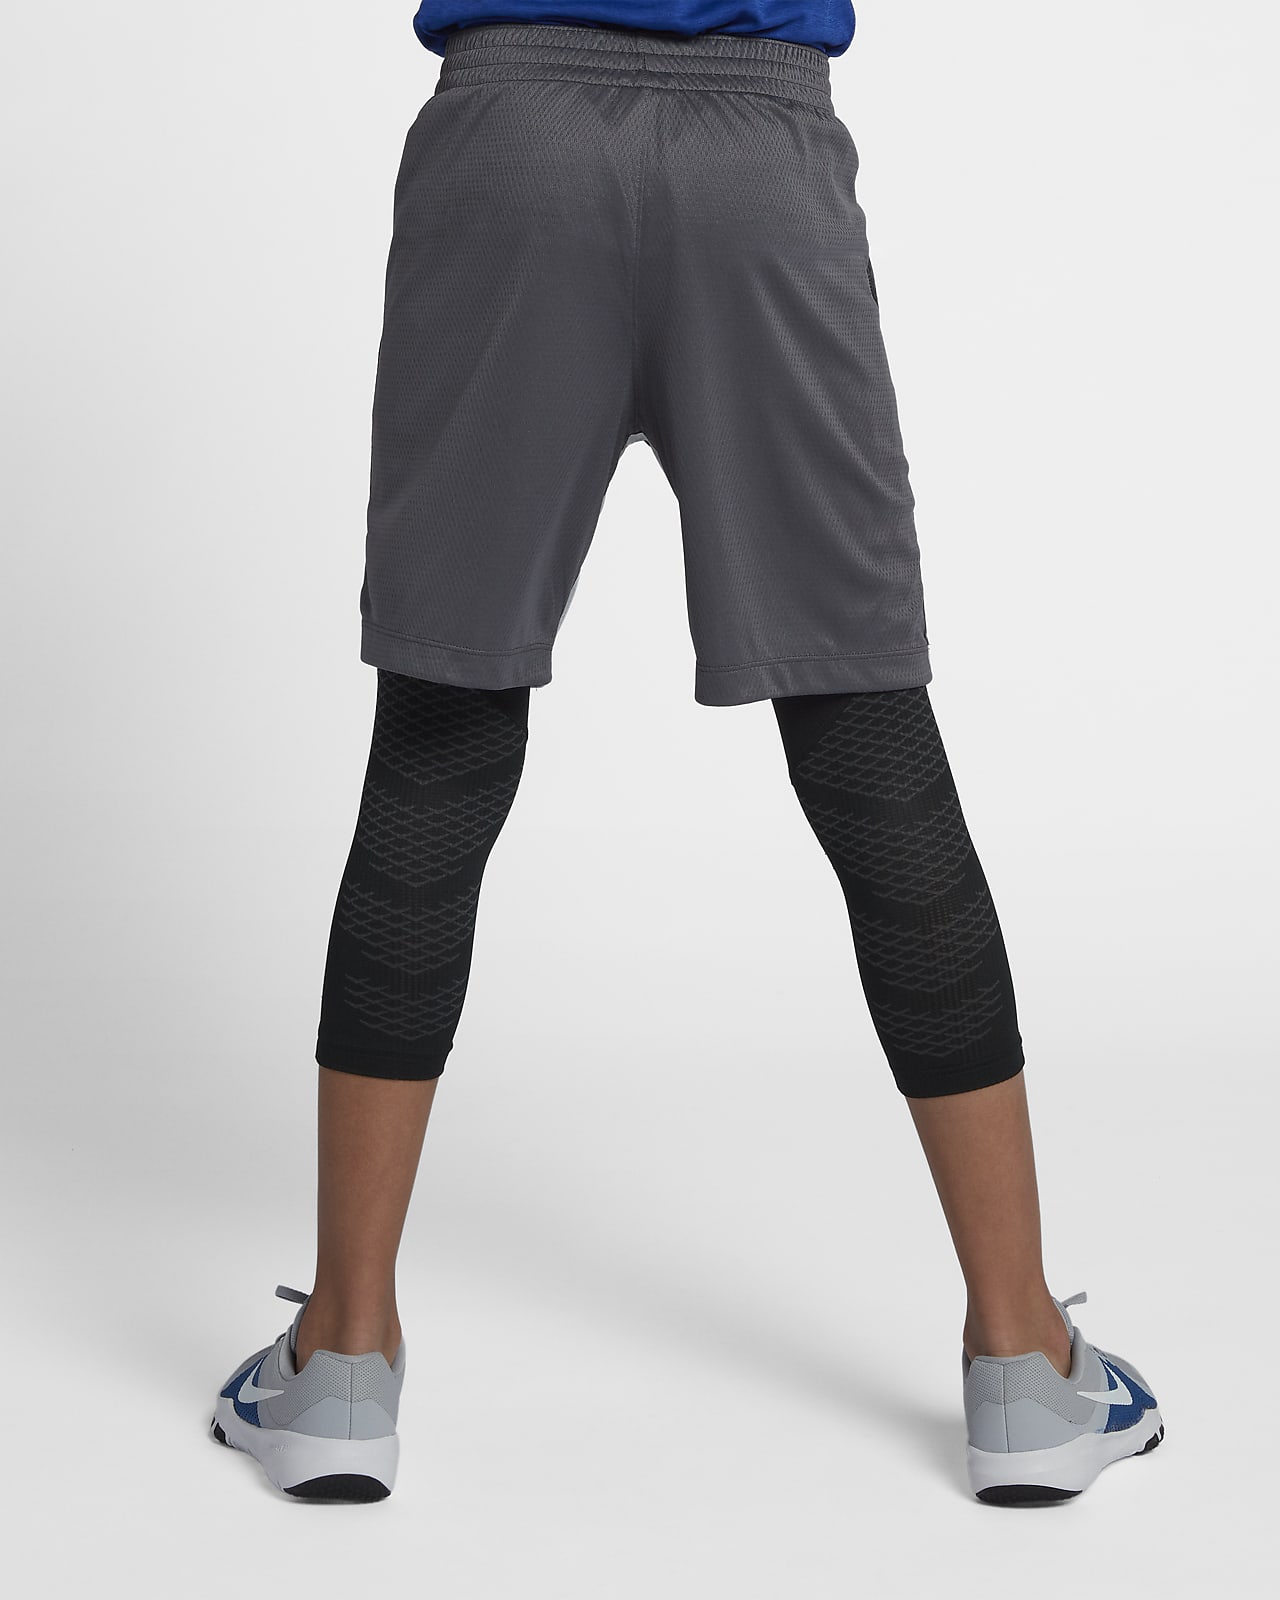 Nike Boys Sport Training Pants - Macy's